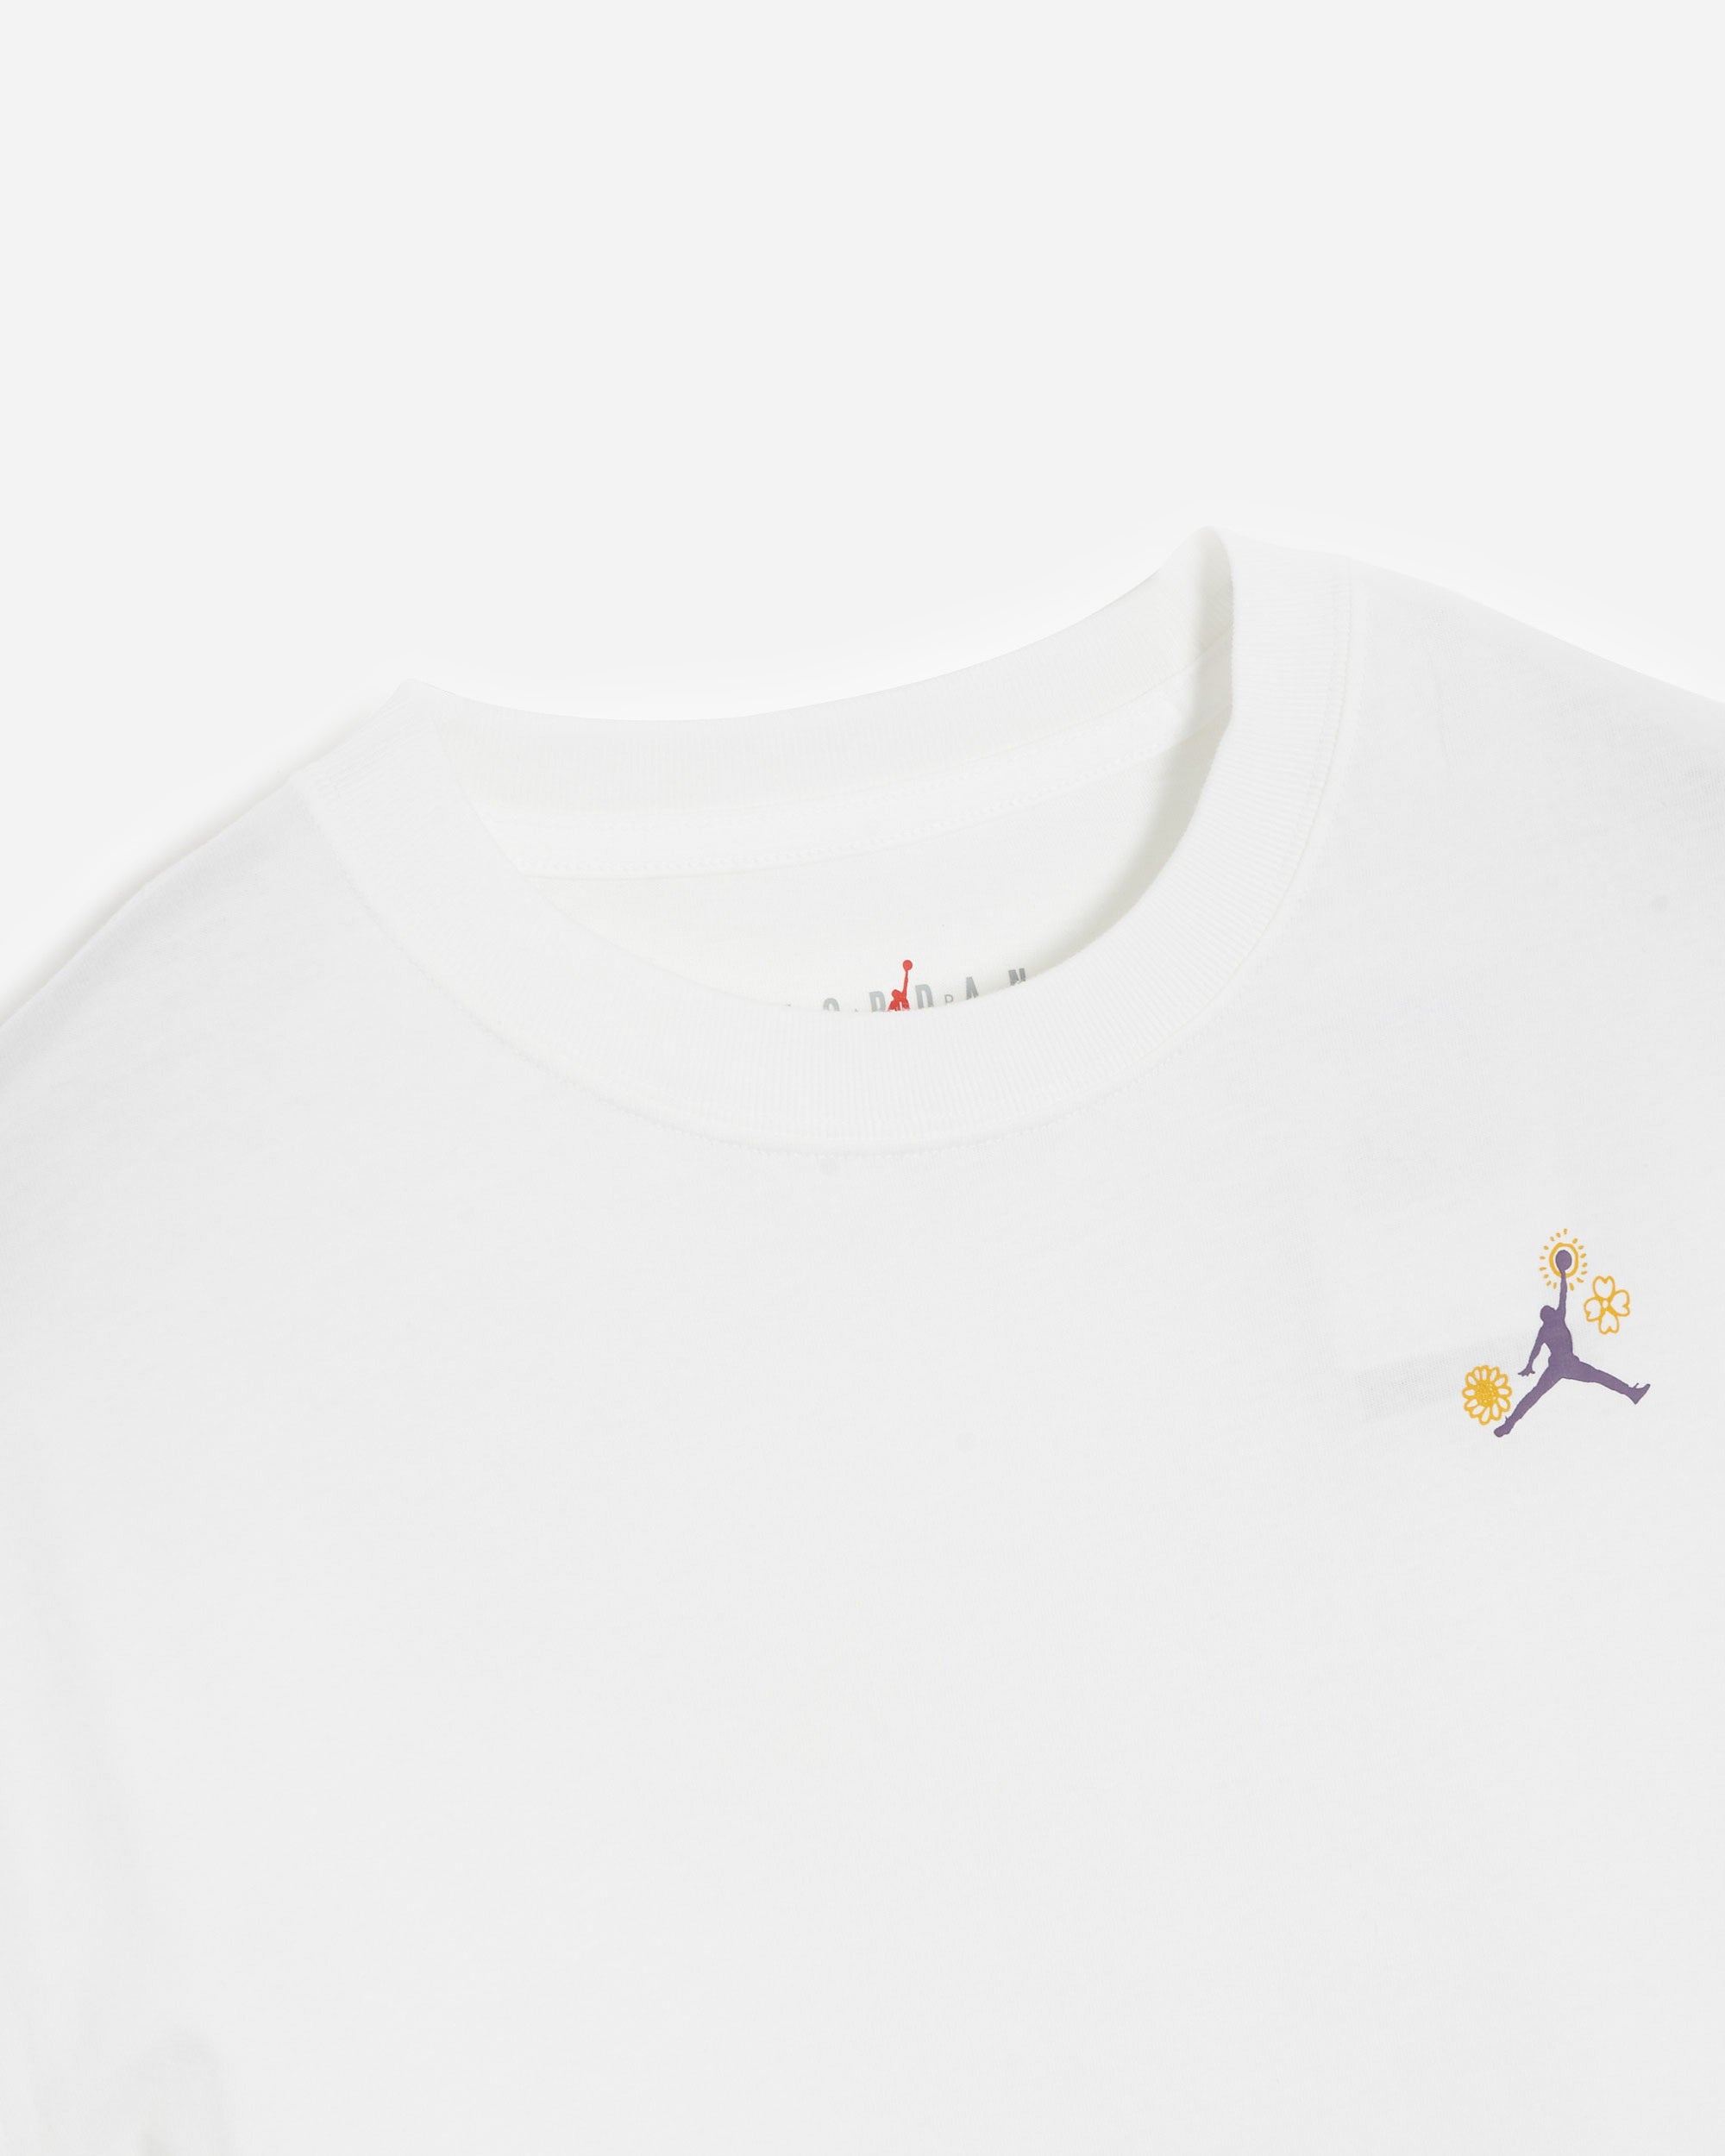 Jordan Brand Women's Graphic T-Shirt 'International Women's Day' WHITE FJ5641-100